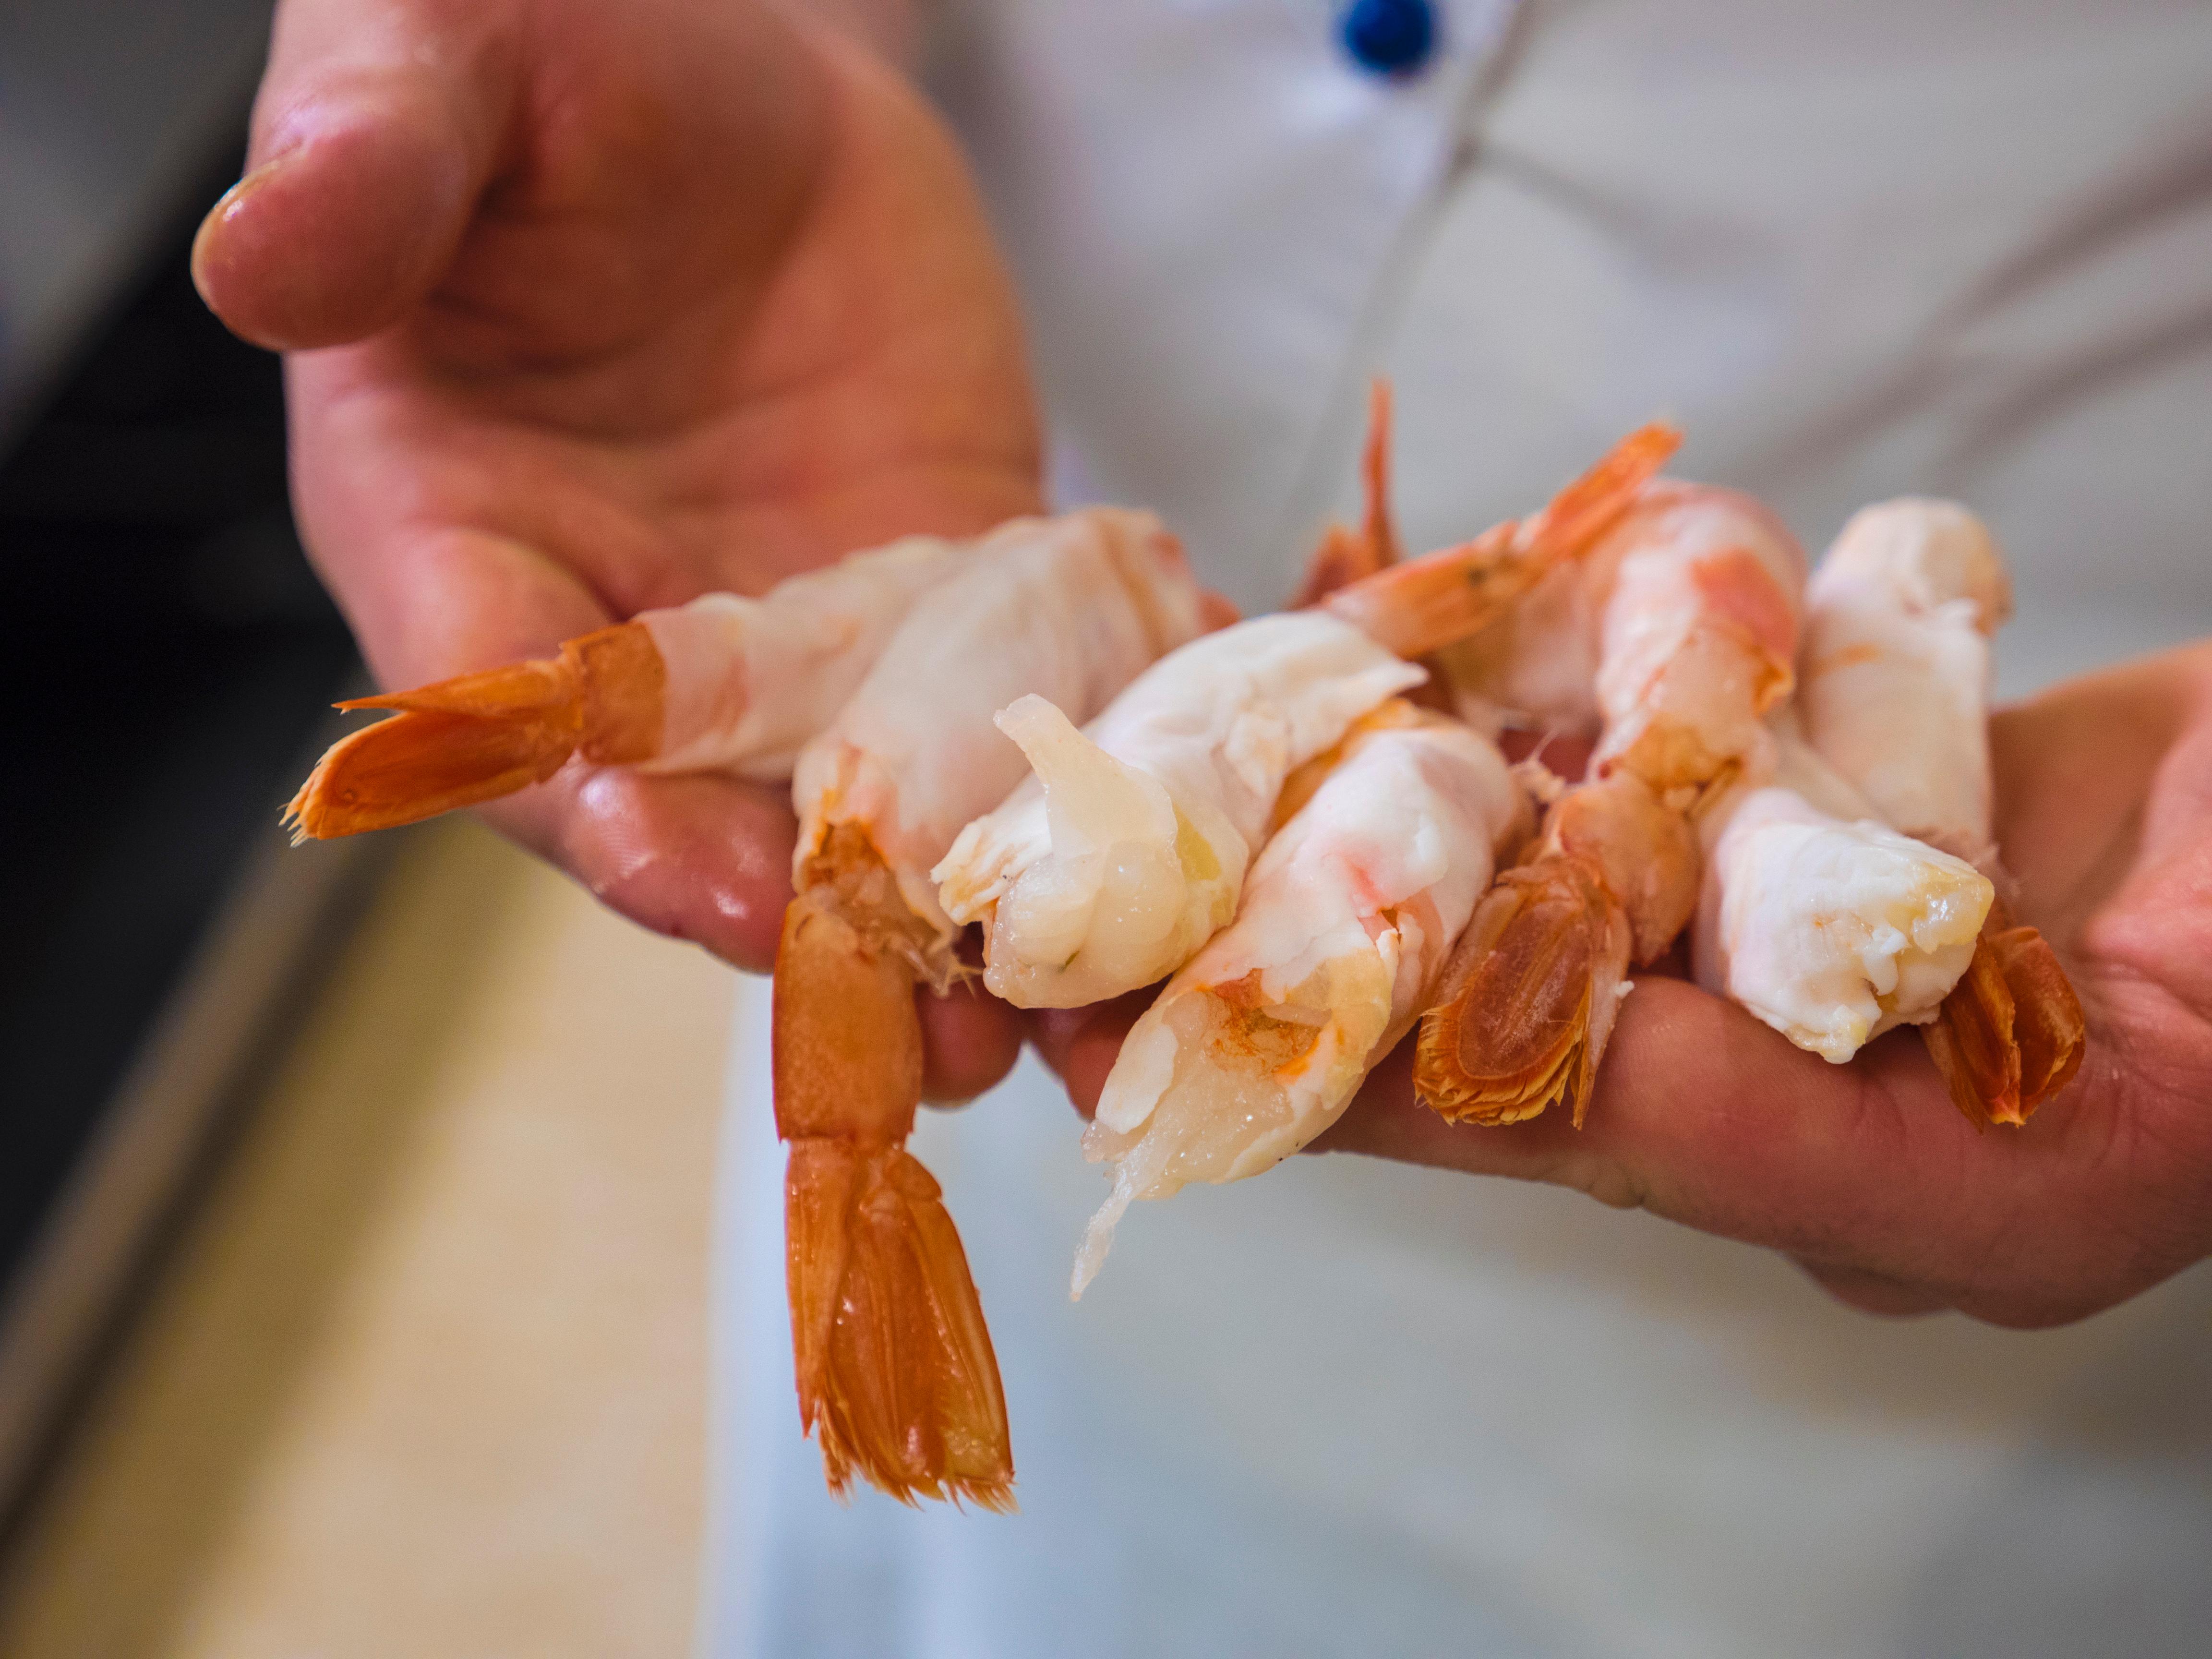 Americans love shrimp